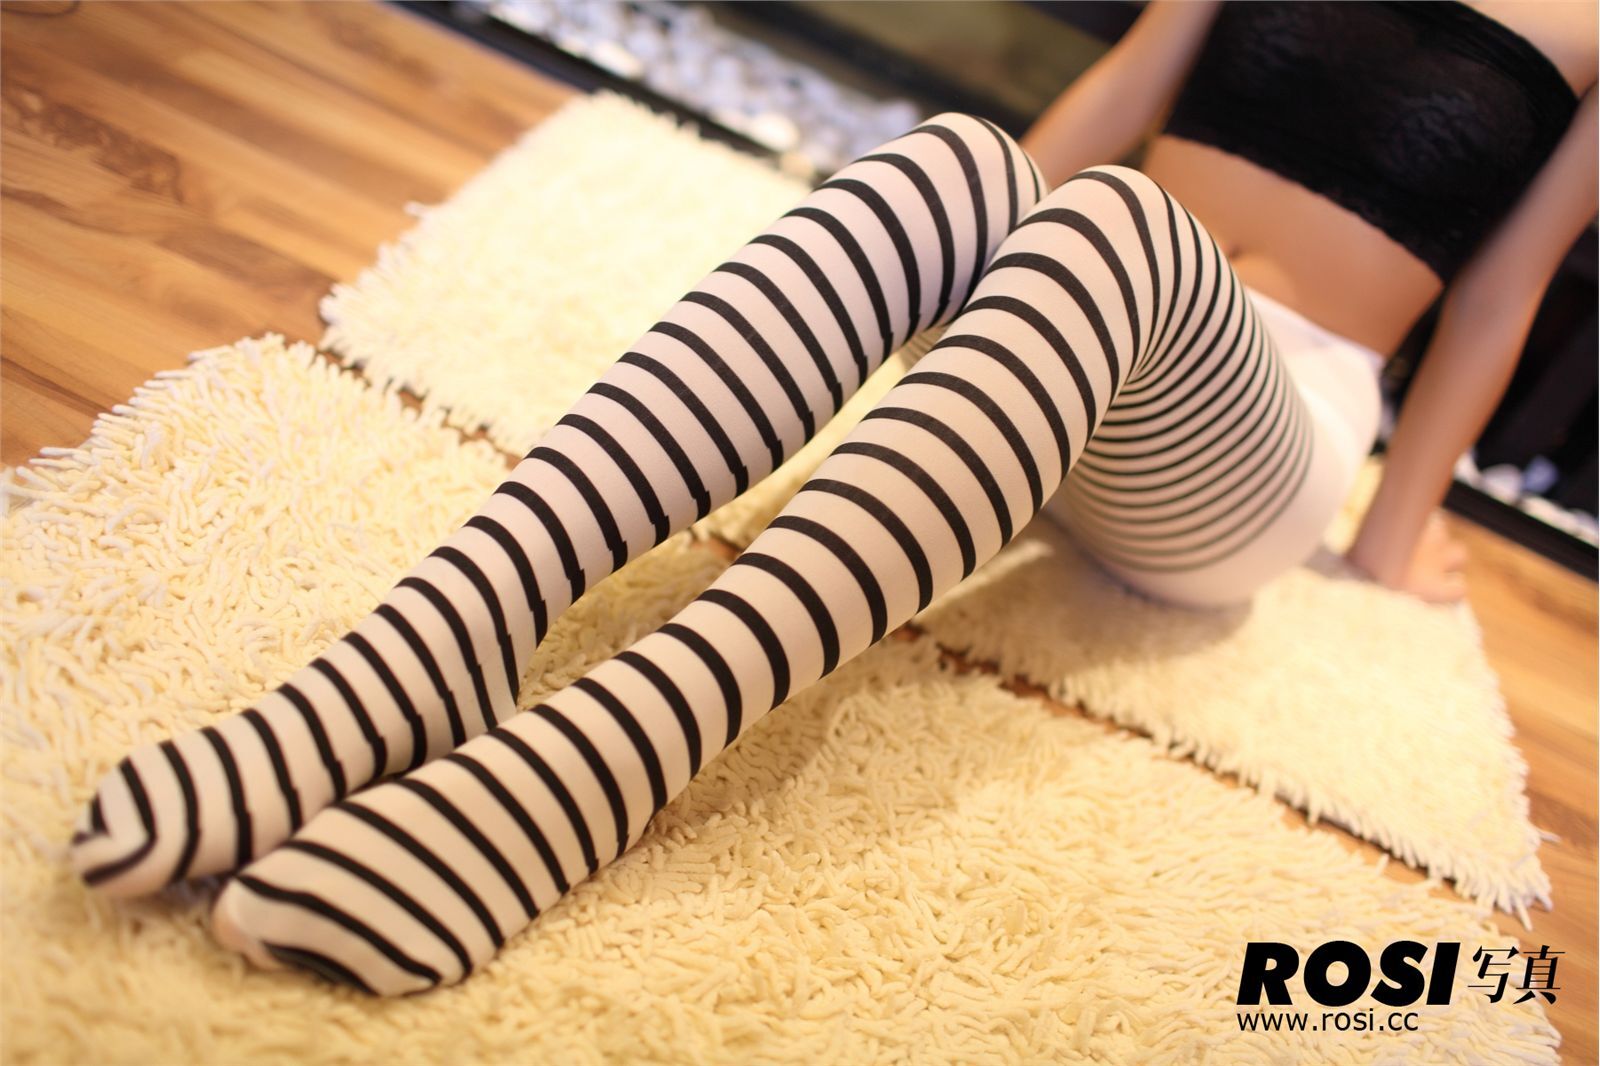 NO.093- ROSI.CC  Zebra silk stockings beauty photo